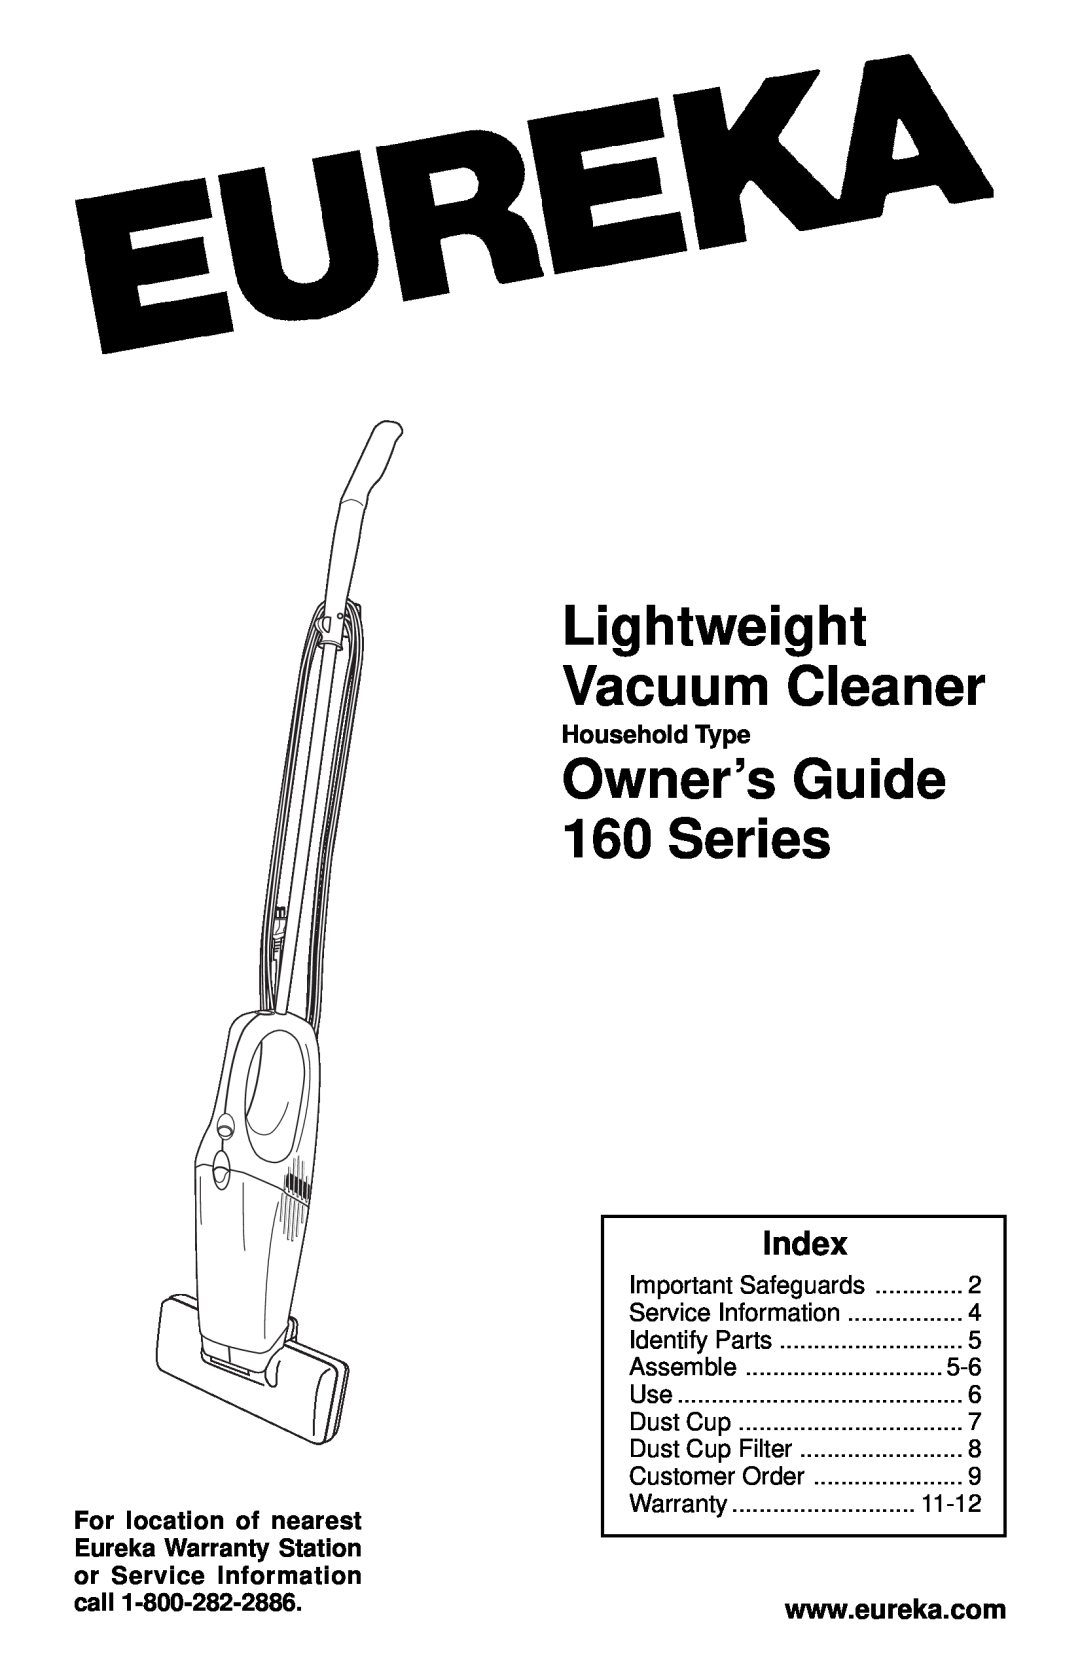 Eureka warranty Index, Lightweight Vacuum Cleaner, Owner’s Guide 160 Series, Household Type 